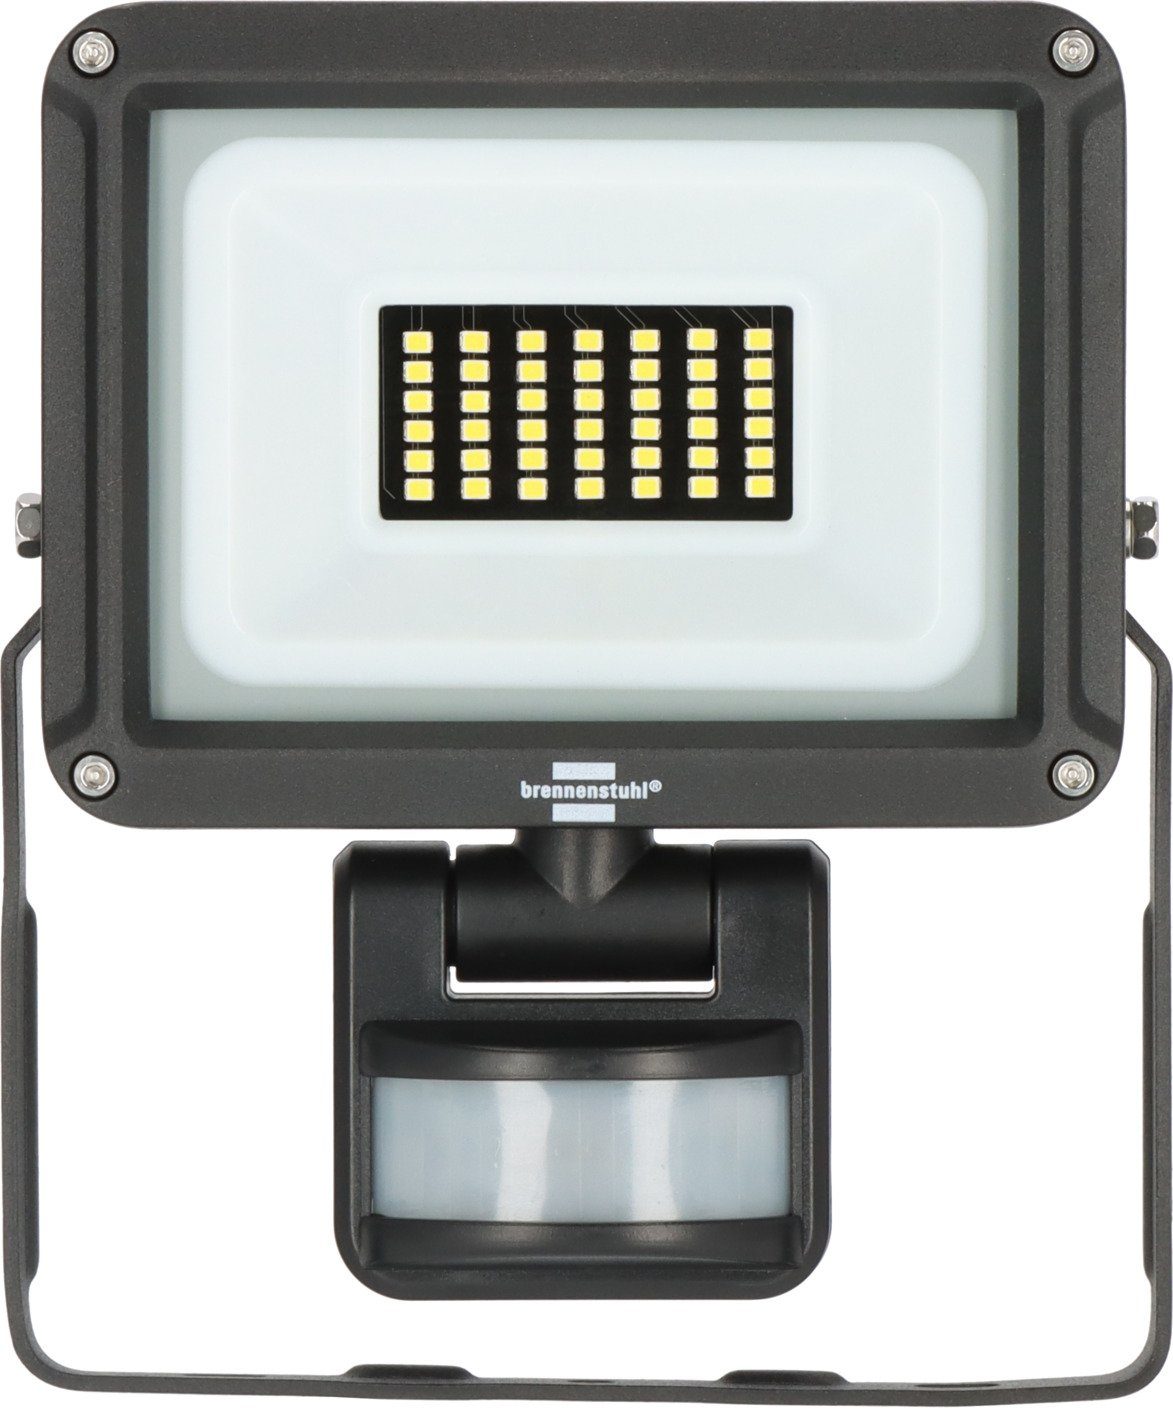 3060 LED Wandstrahler für LED außen P, JARO fest Brennenstuhl integriert,